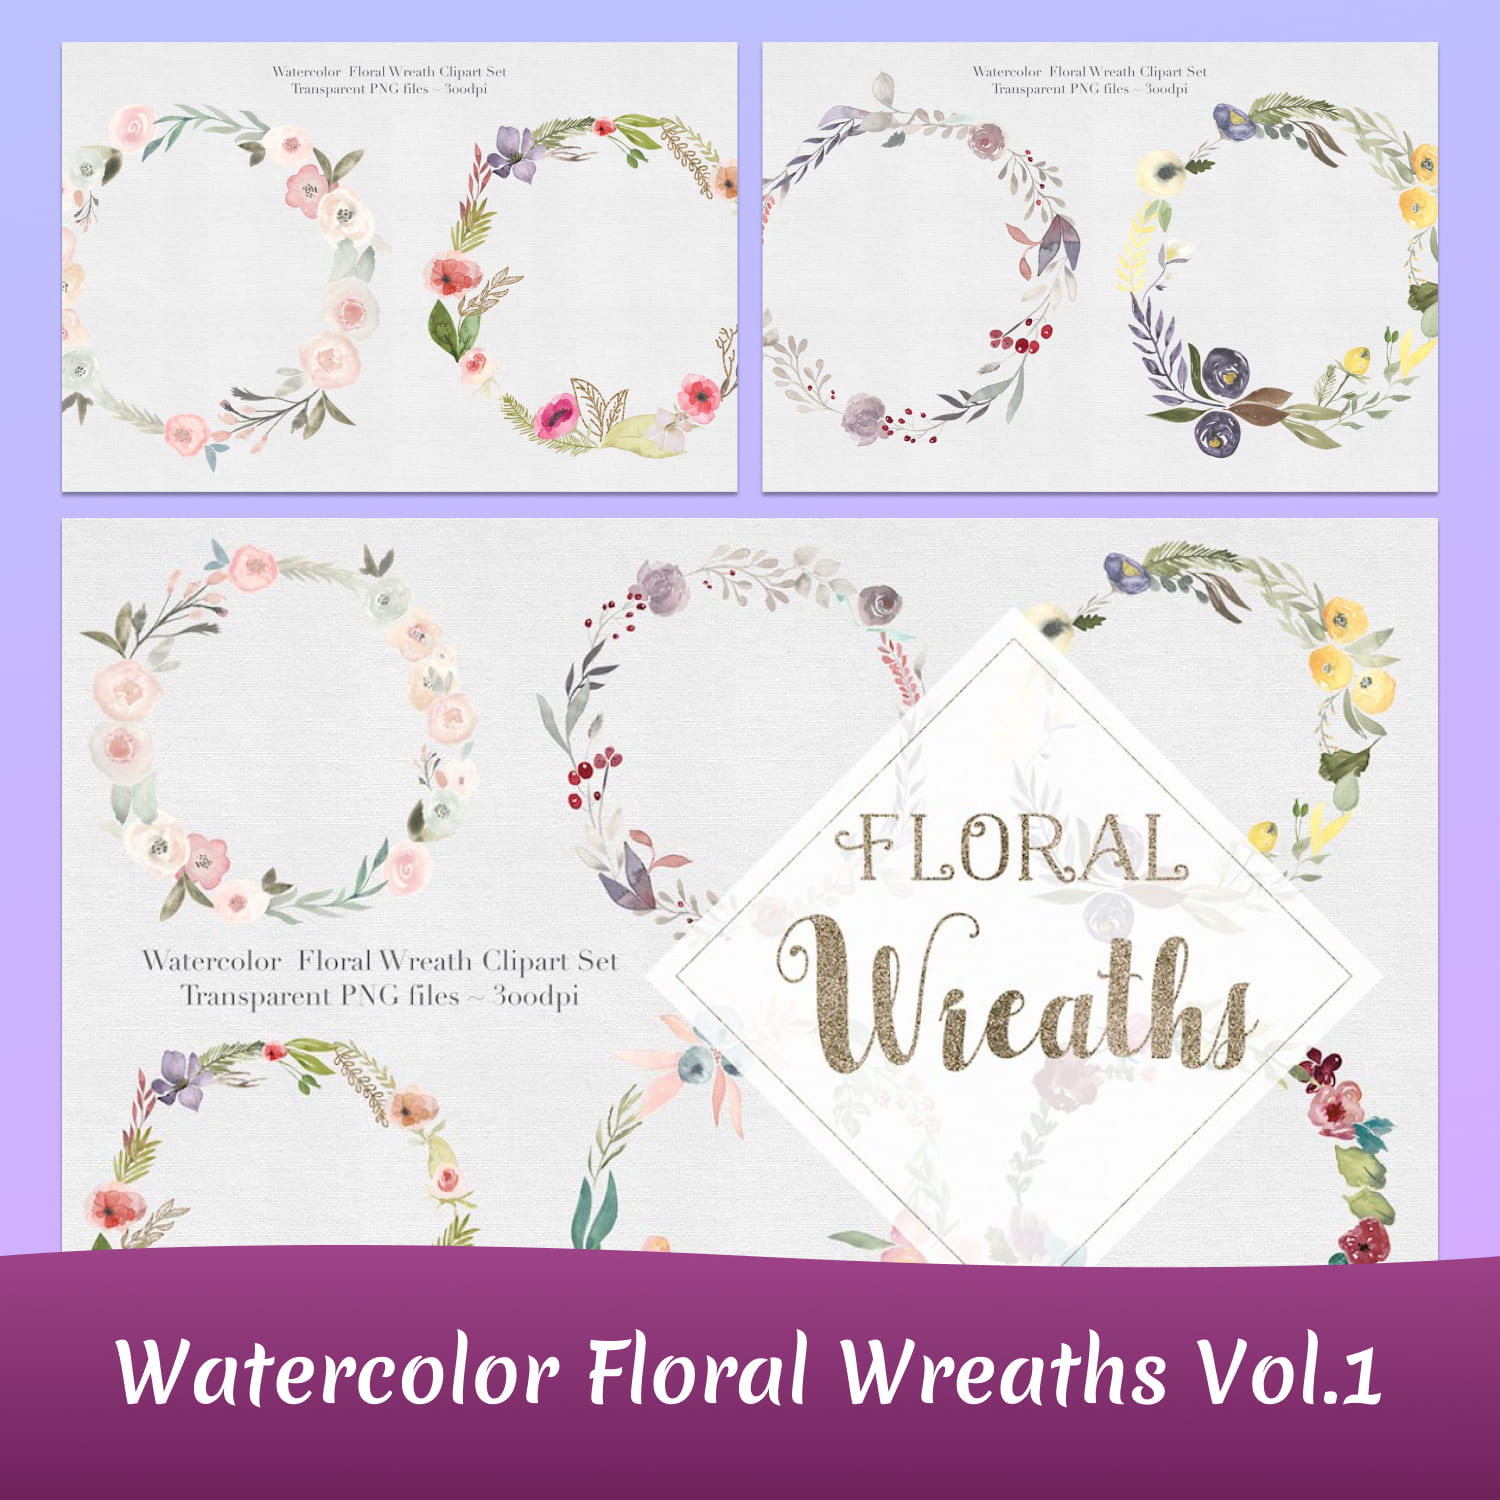 Watercolor Floral Wreaths Botanic Graphics Set cover image.